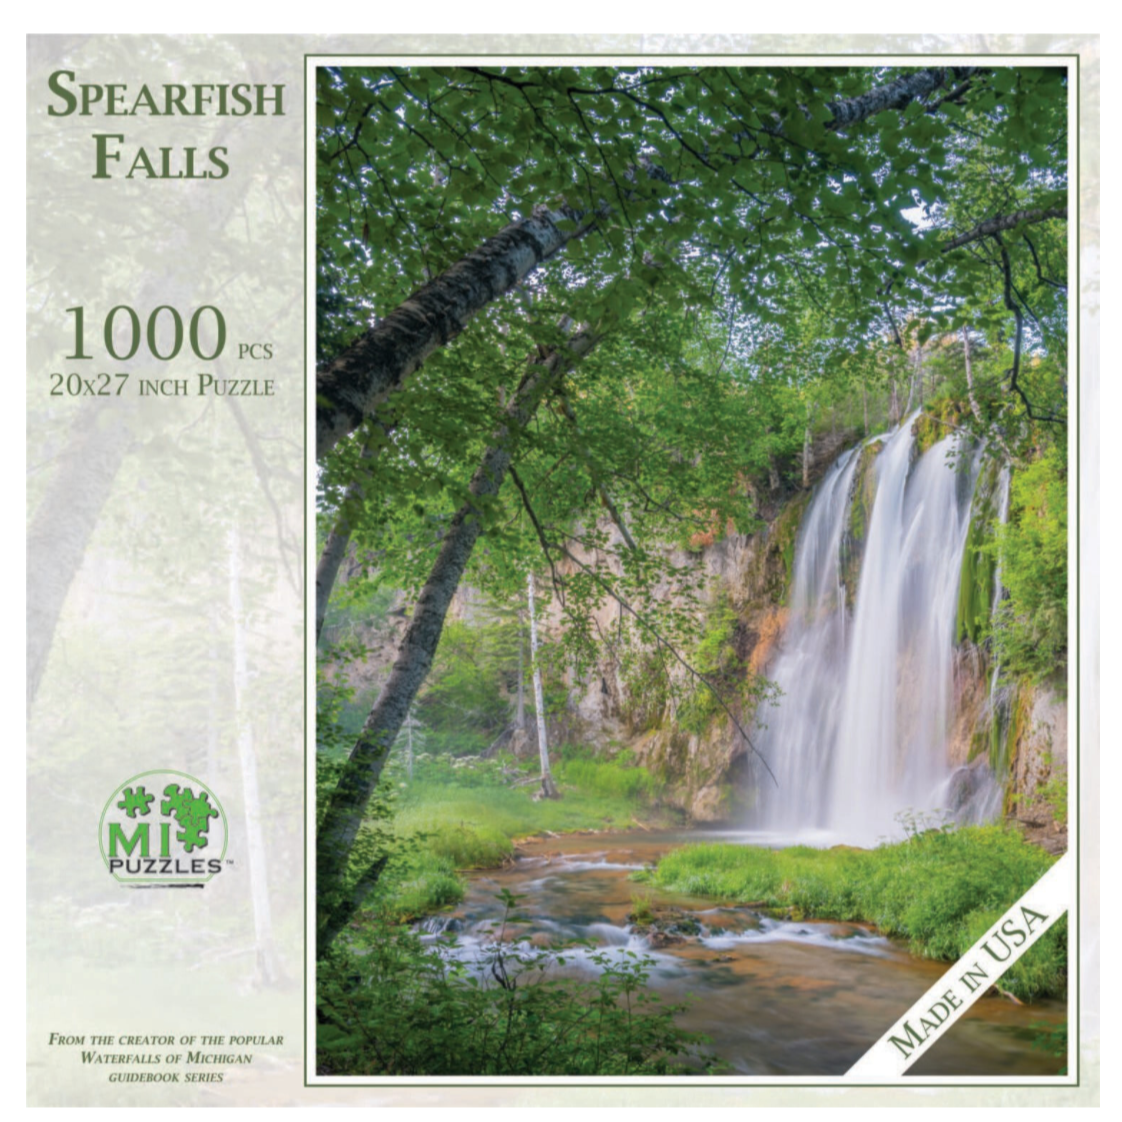 Spearfish Falls 1000 pc Jigsaw Puzzle